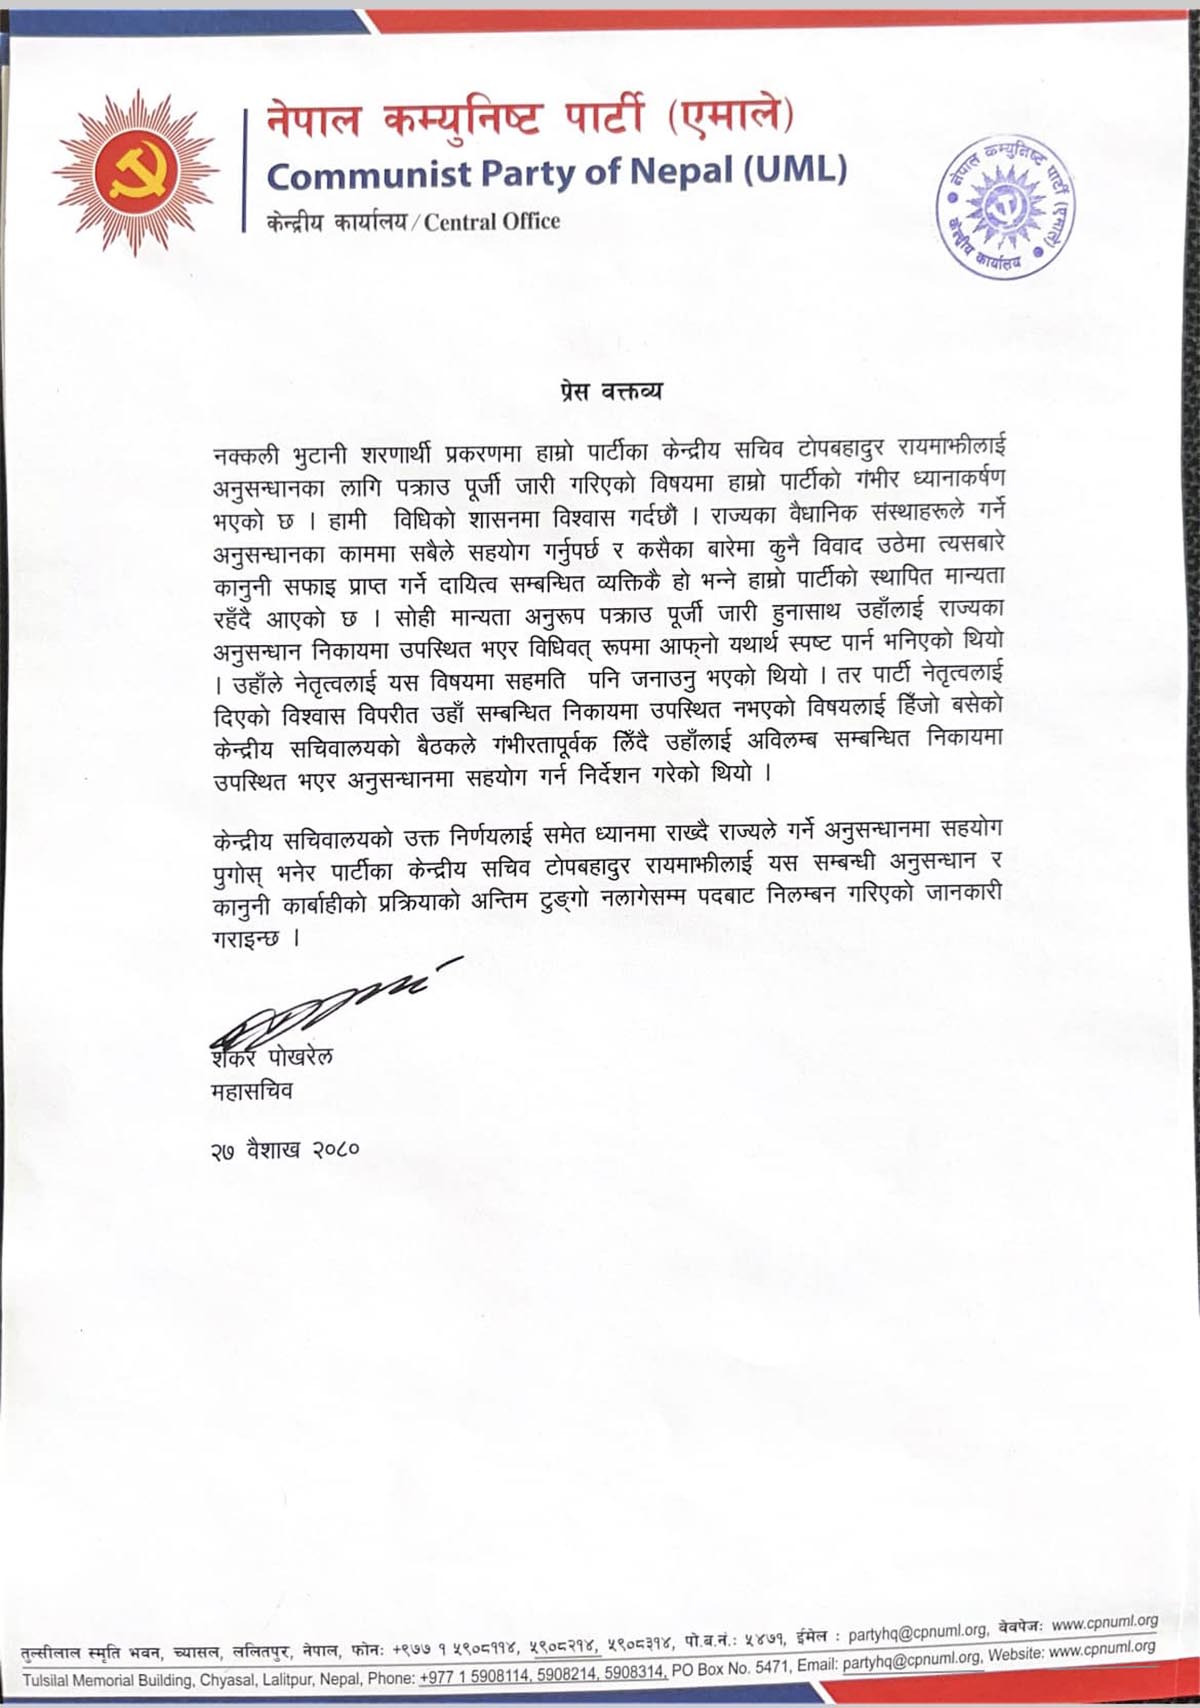 Top Bahadur Rayamajhi suspended from his party